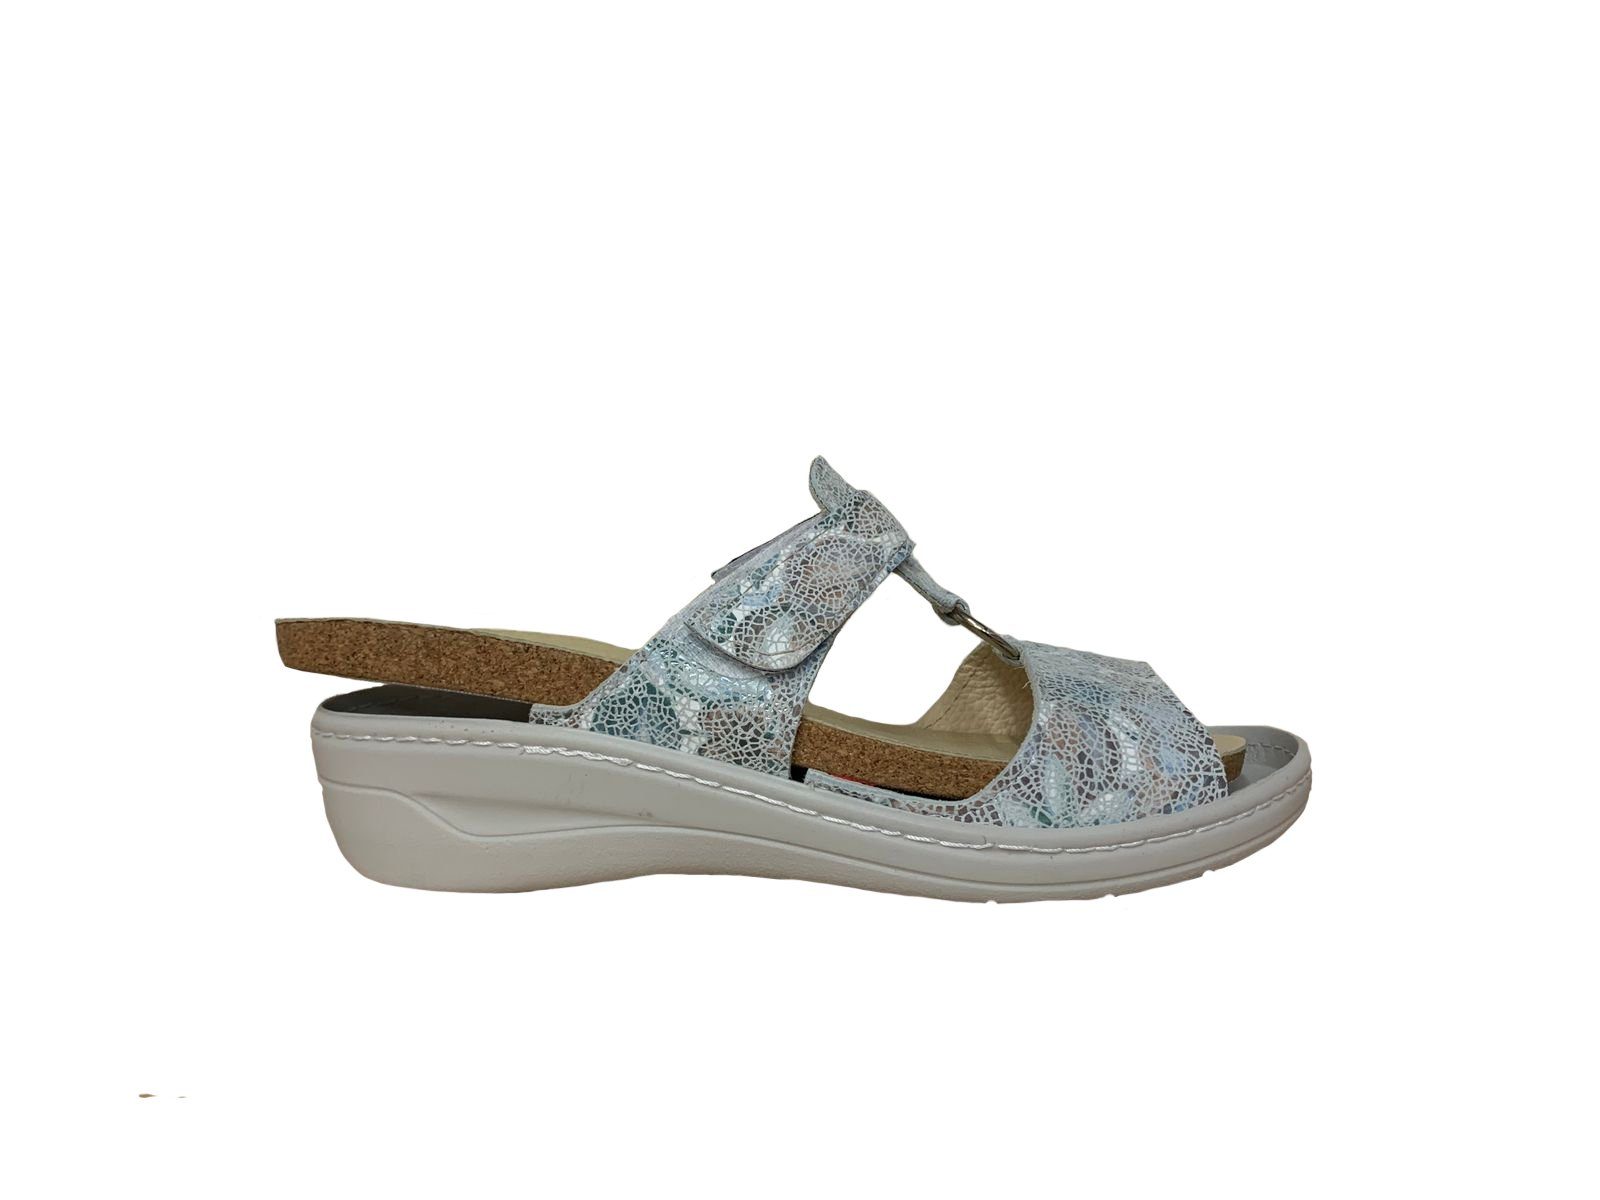 Damen Franken Franken-Schuhe Schuhe 2020-1 marmor grau/kombi Clog Pantolette